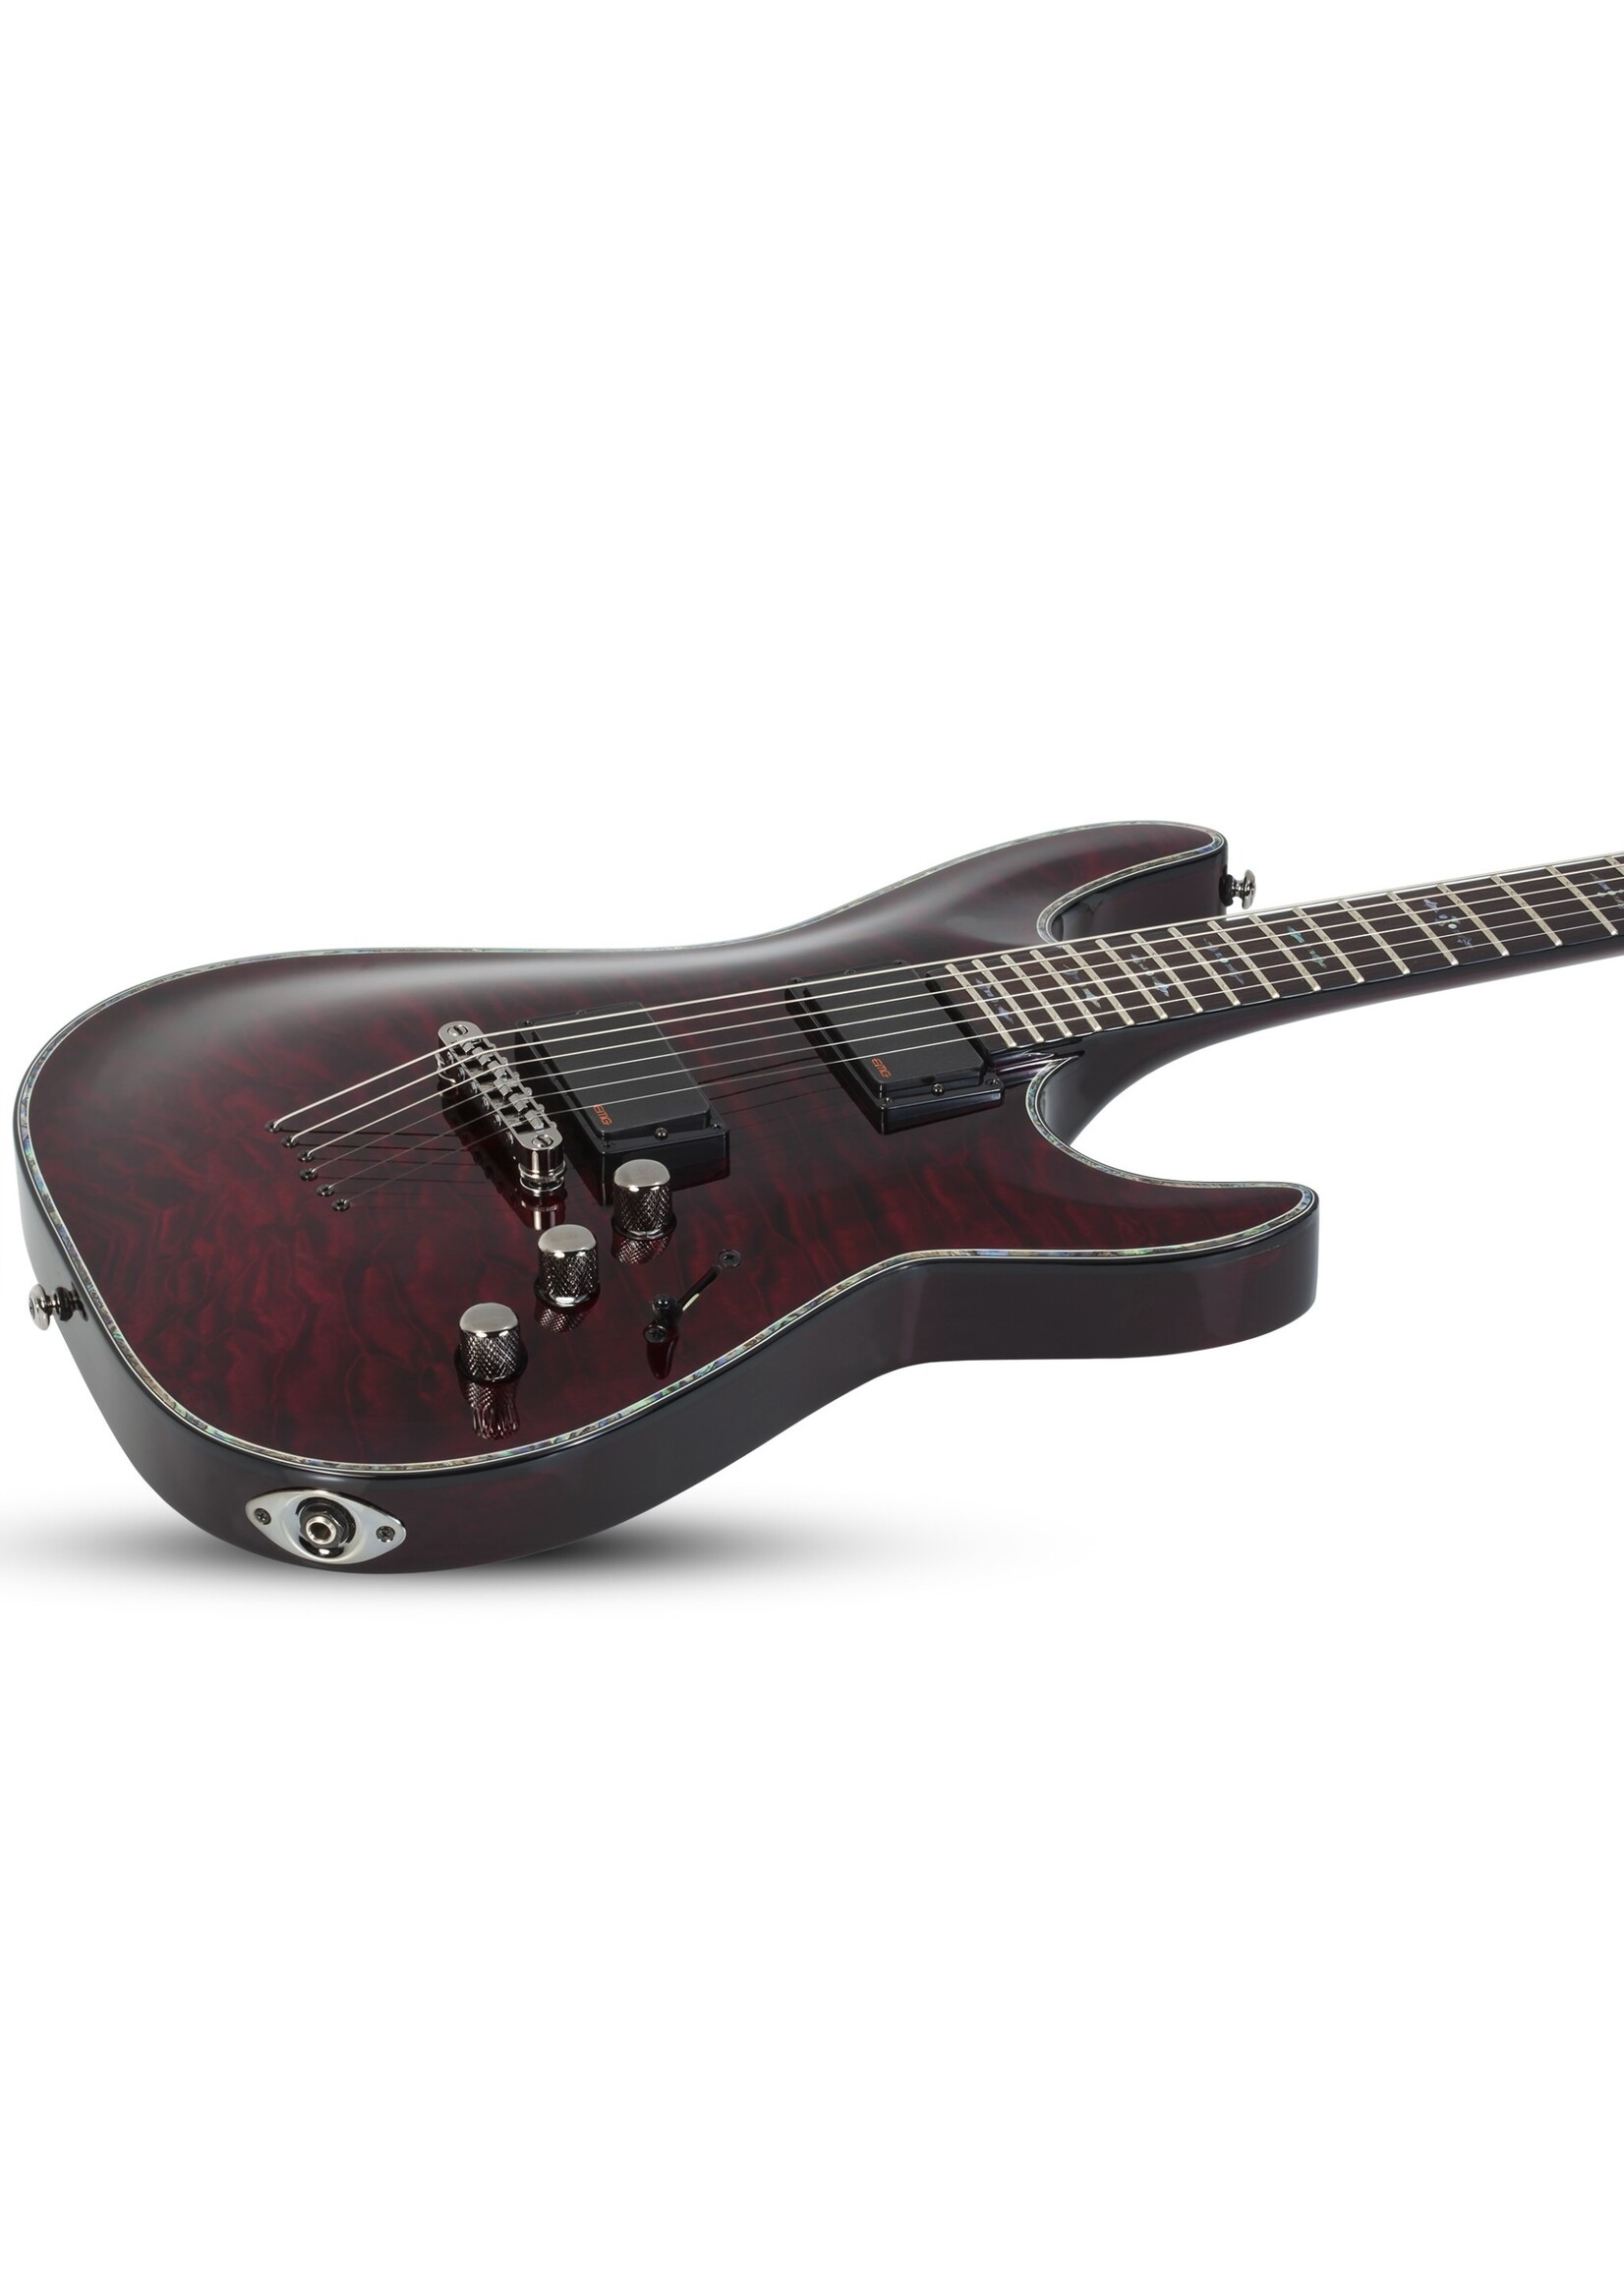 Schecter Schecter Guitar Research 1788 Hellraiser C-1 Electric Guitar - Black Cherry